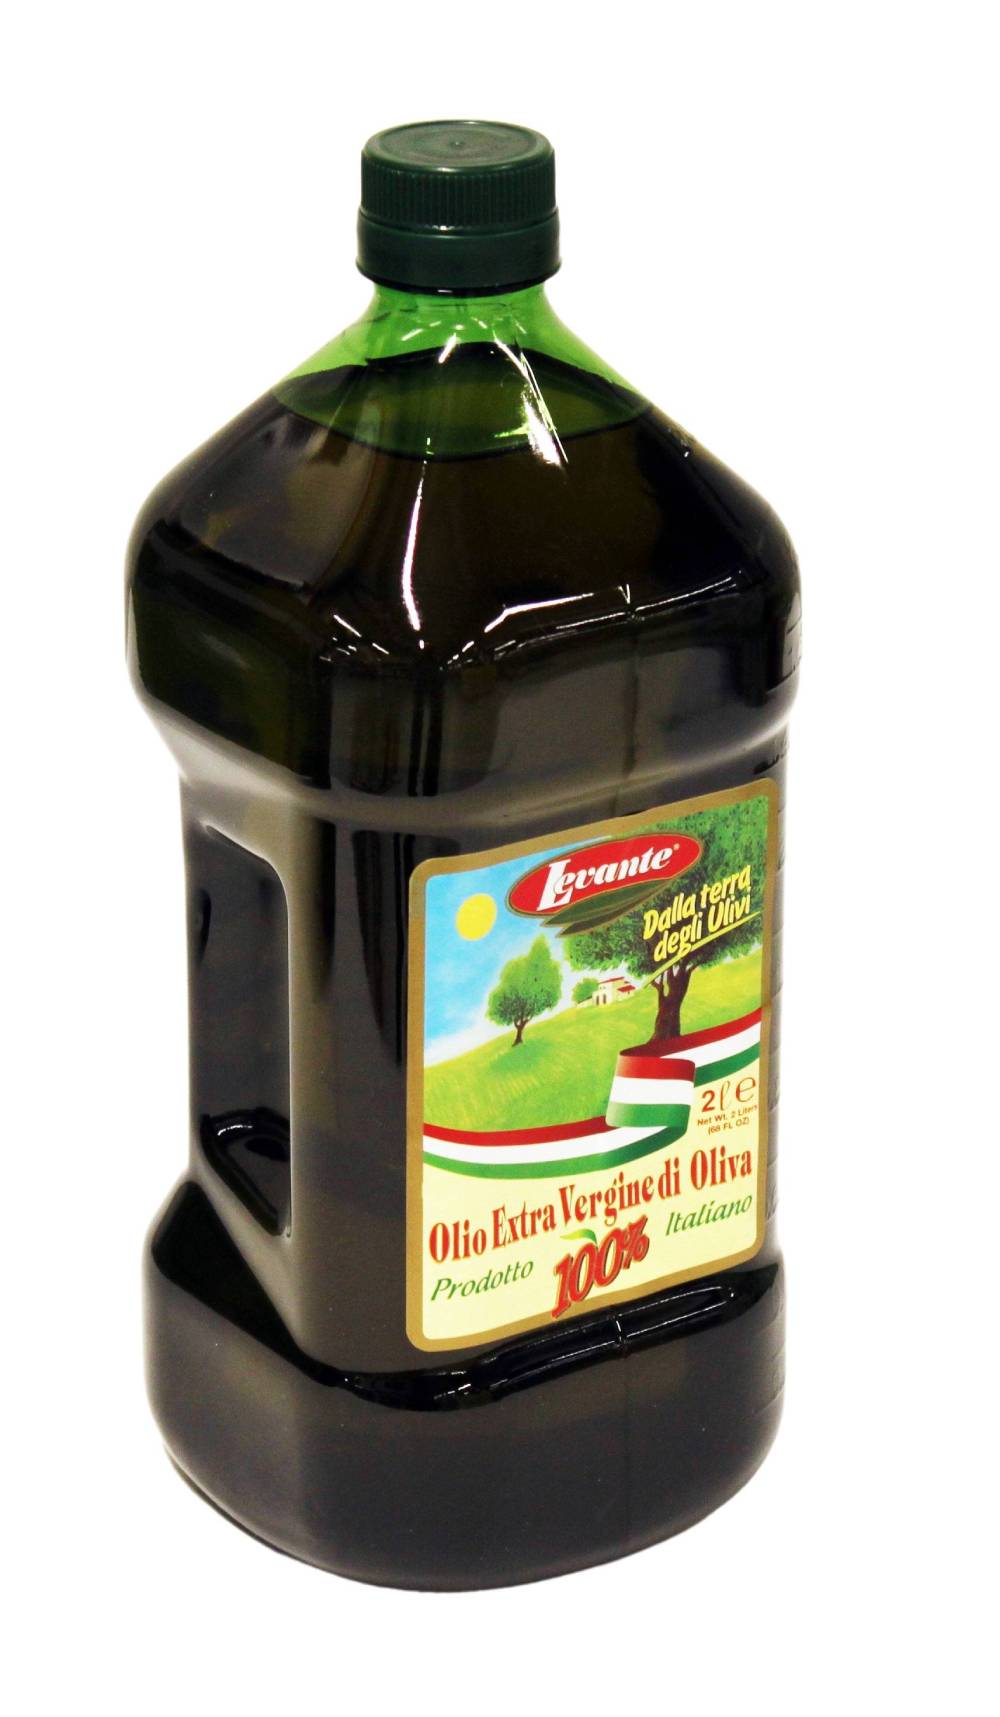 Levante Extra Virgin Olive Oil 2 L